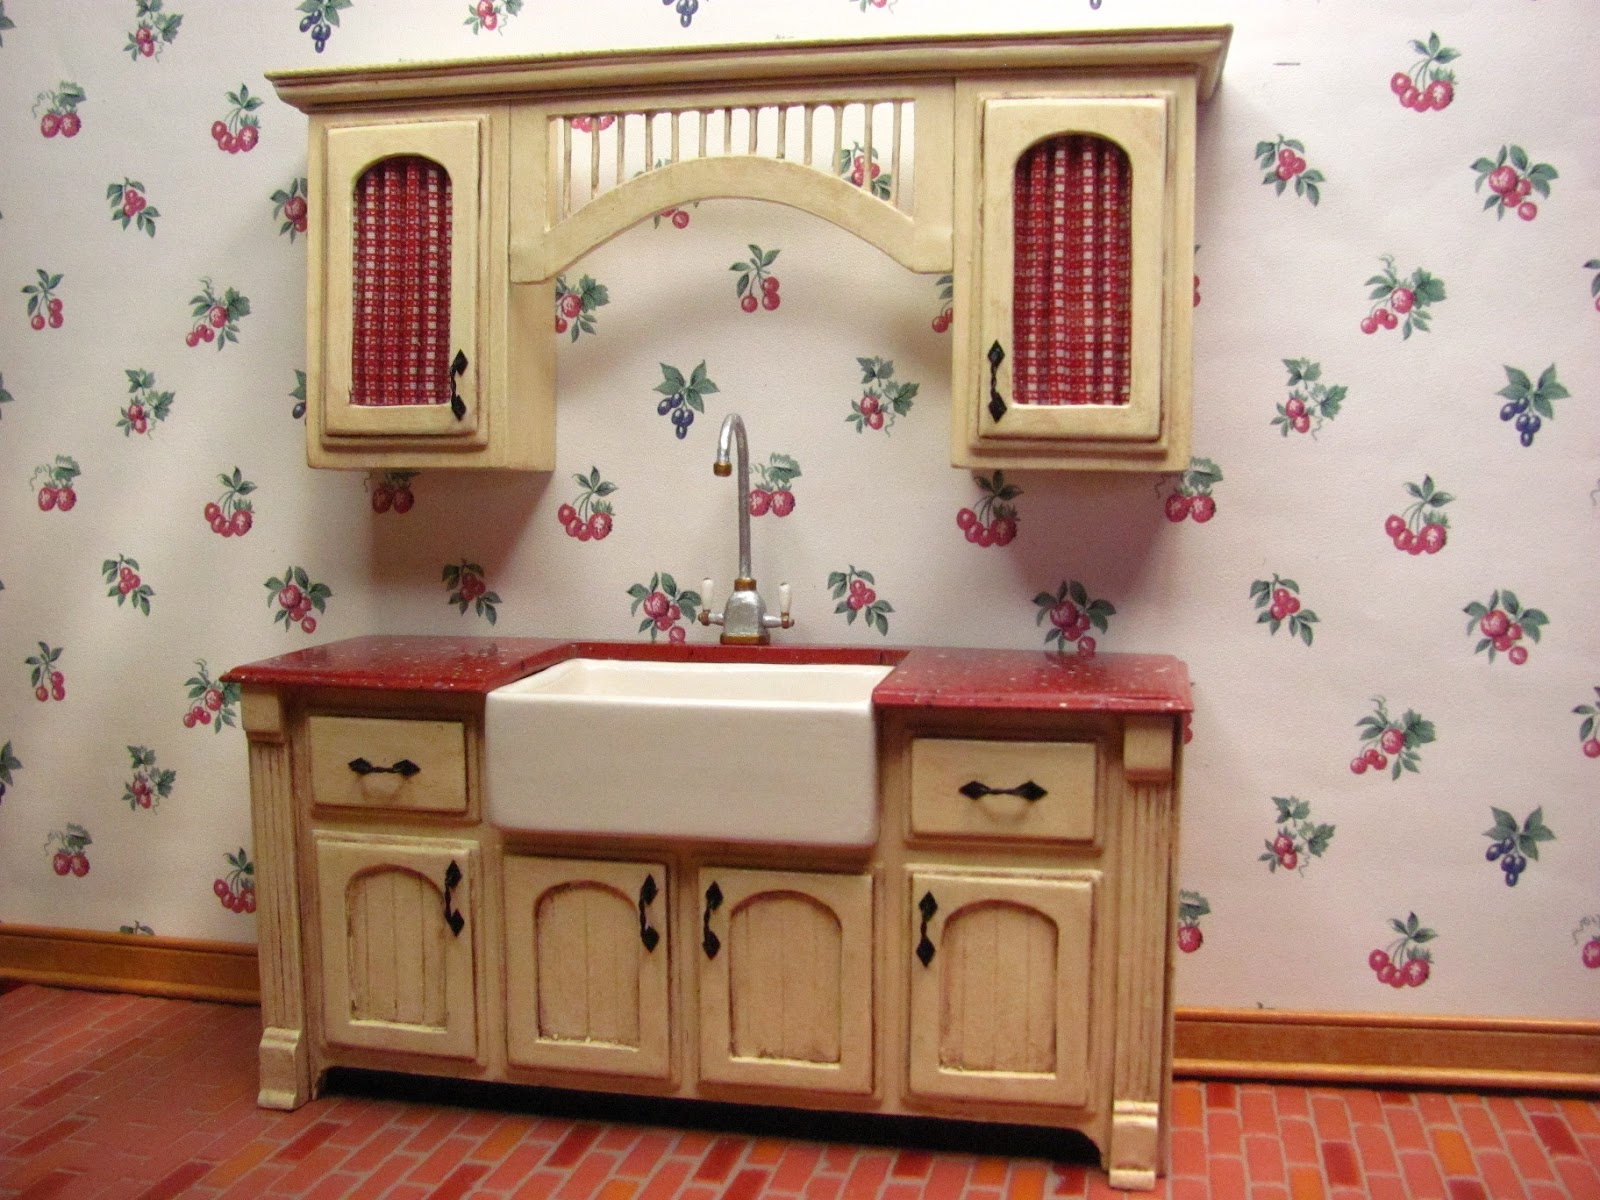  Miniature Dollhouse Kitchen Furniture with Simple Decor